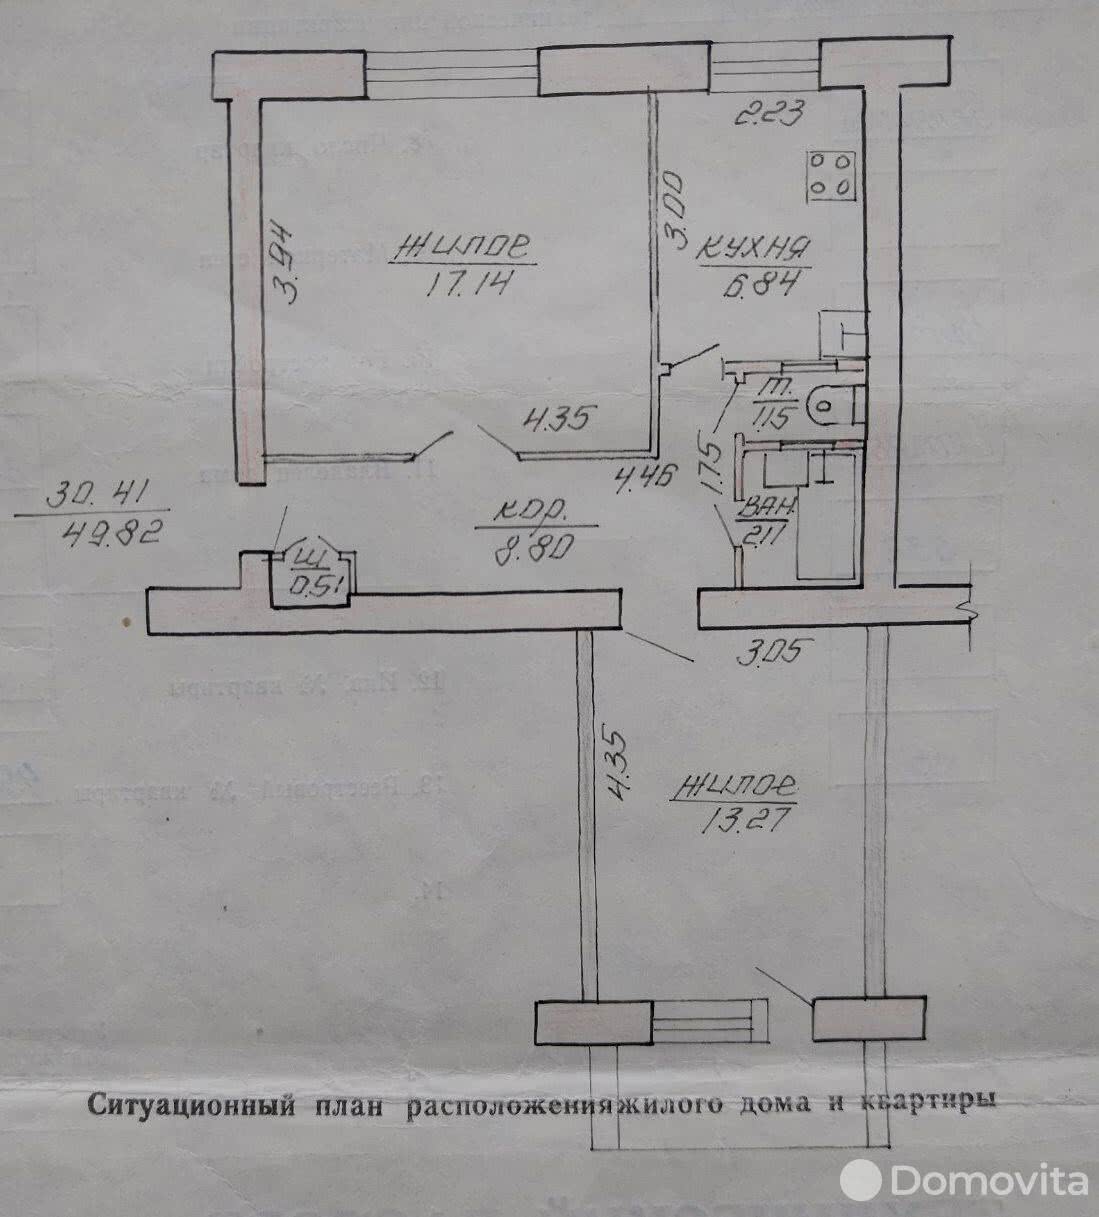 Цена продажи квартиры, Витебск, ул. Гагарина, д. 108